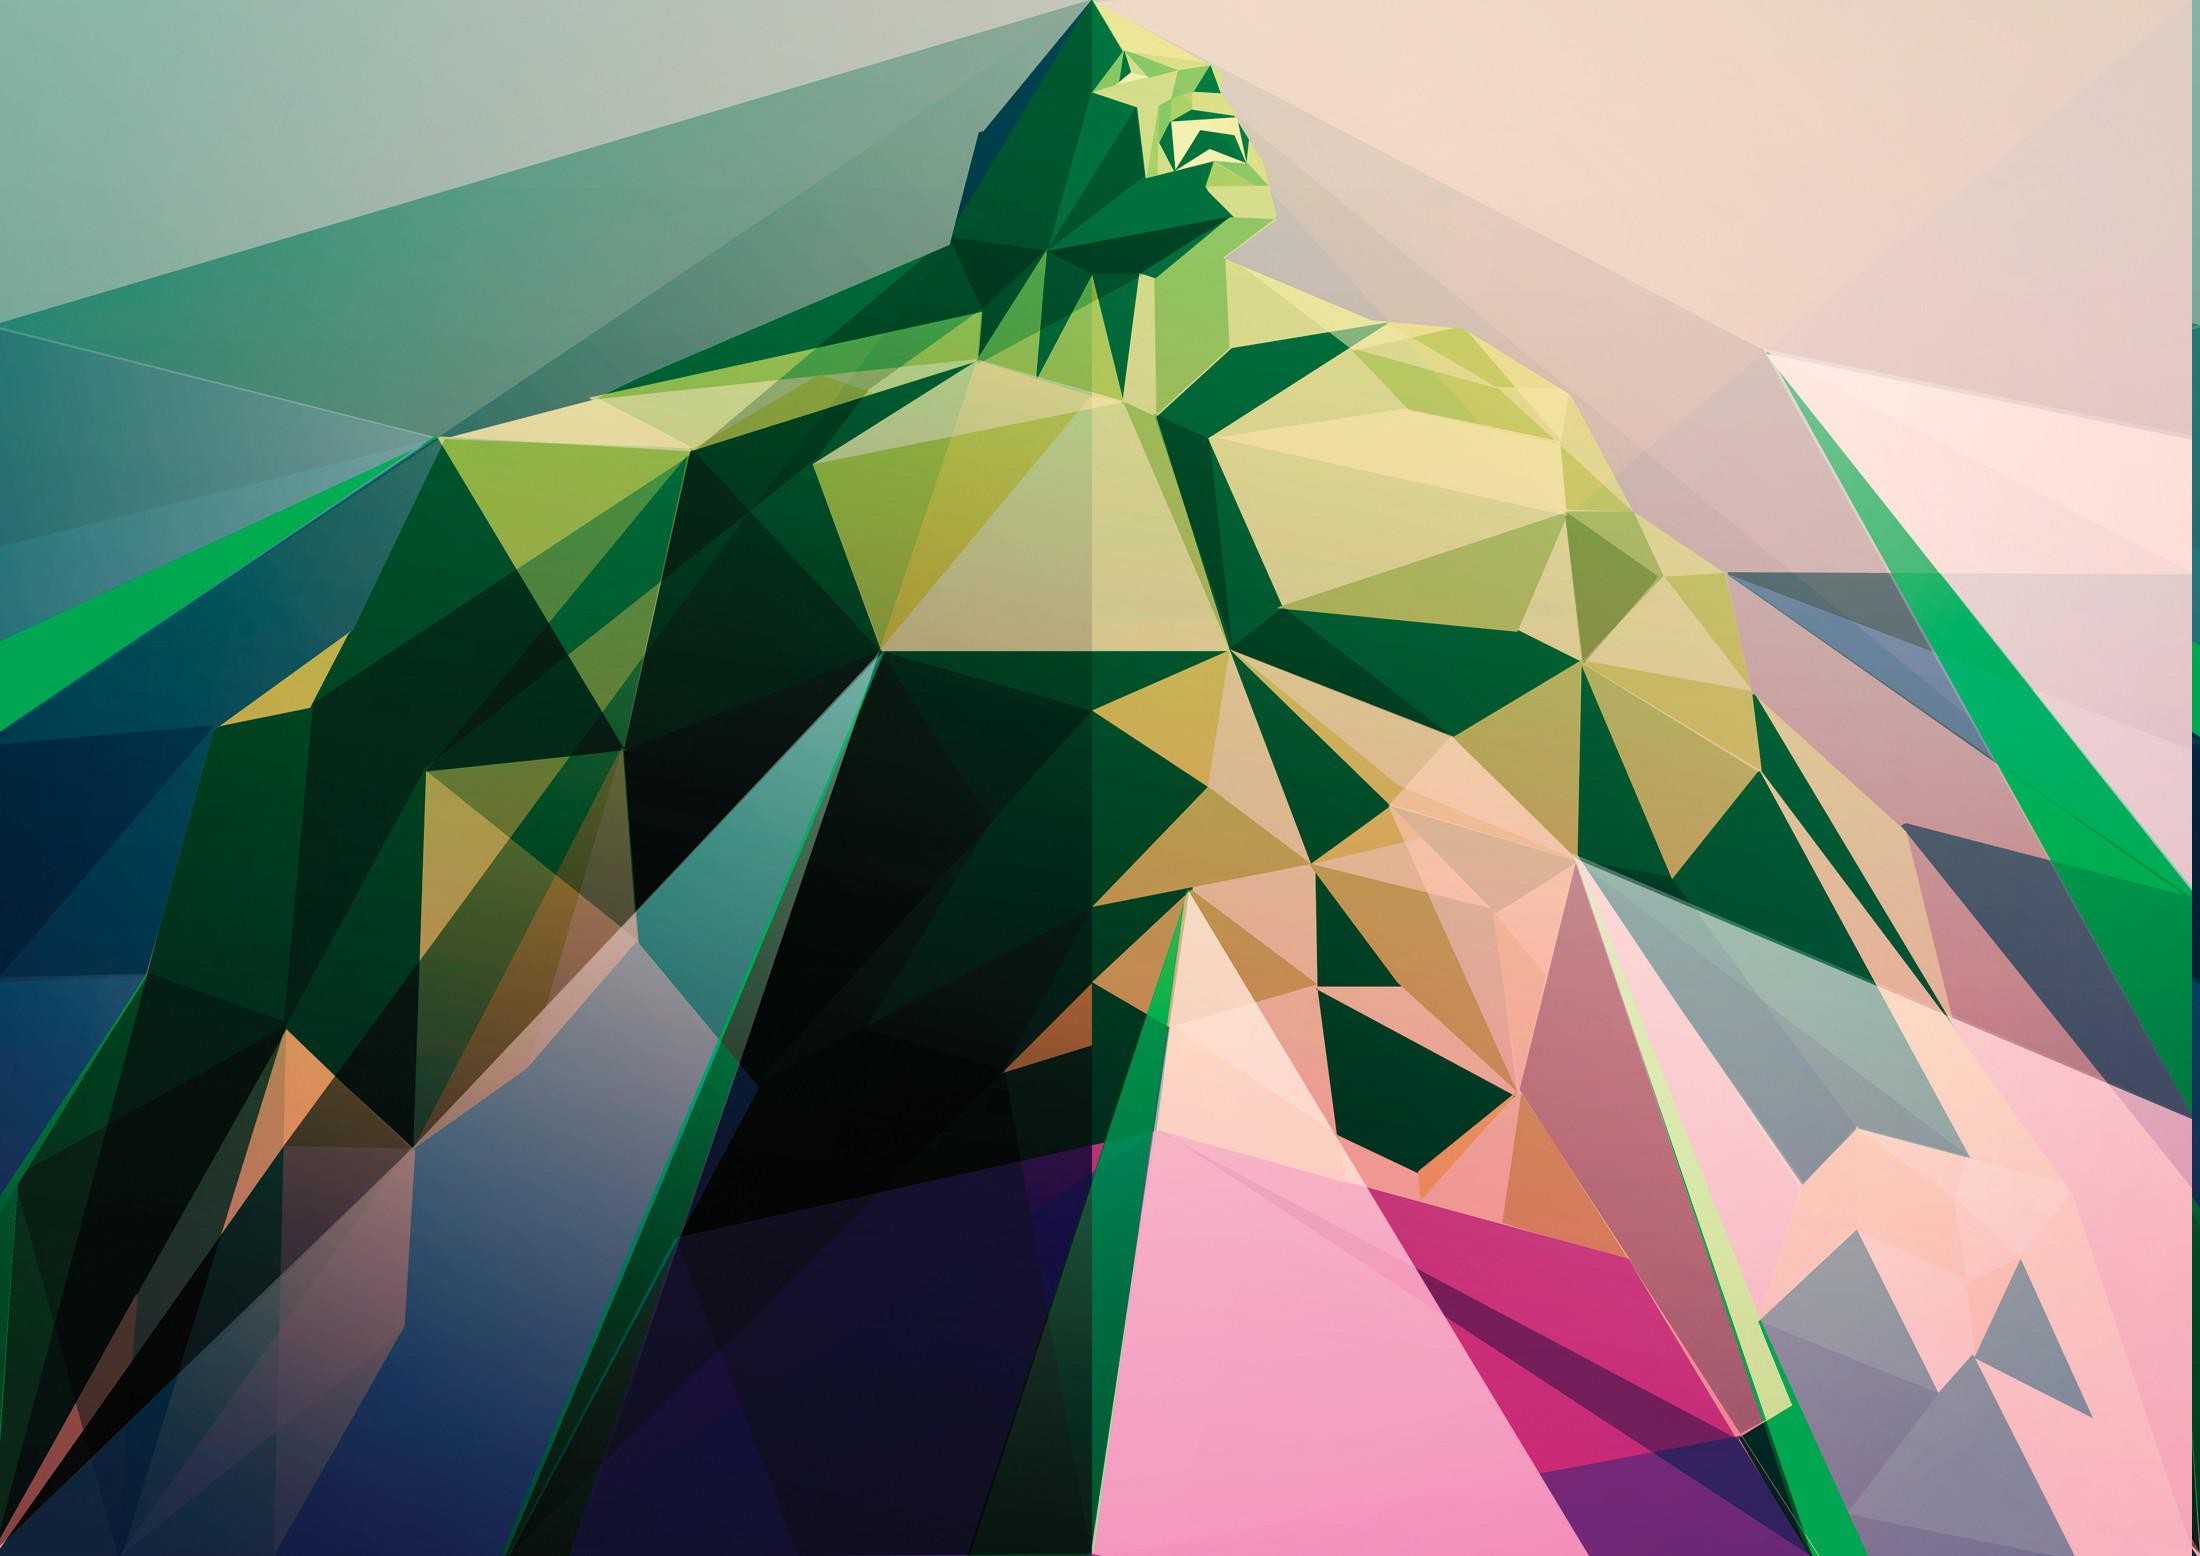 hulk wallpaper,green,illustration,triangle,graphic design,design